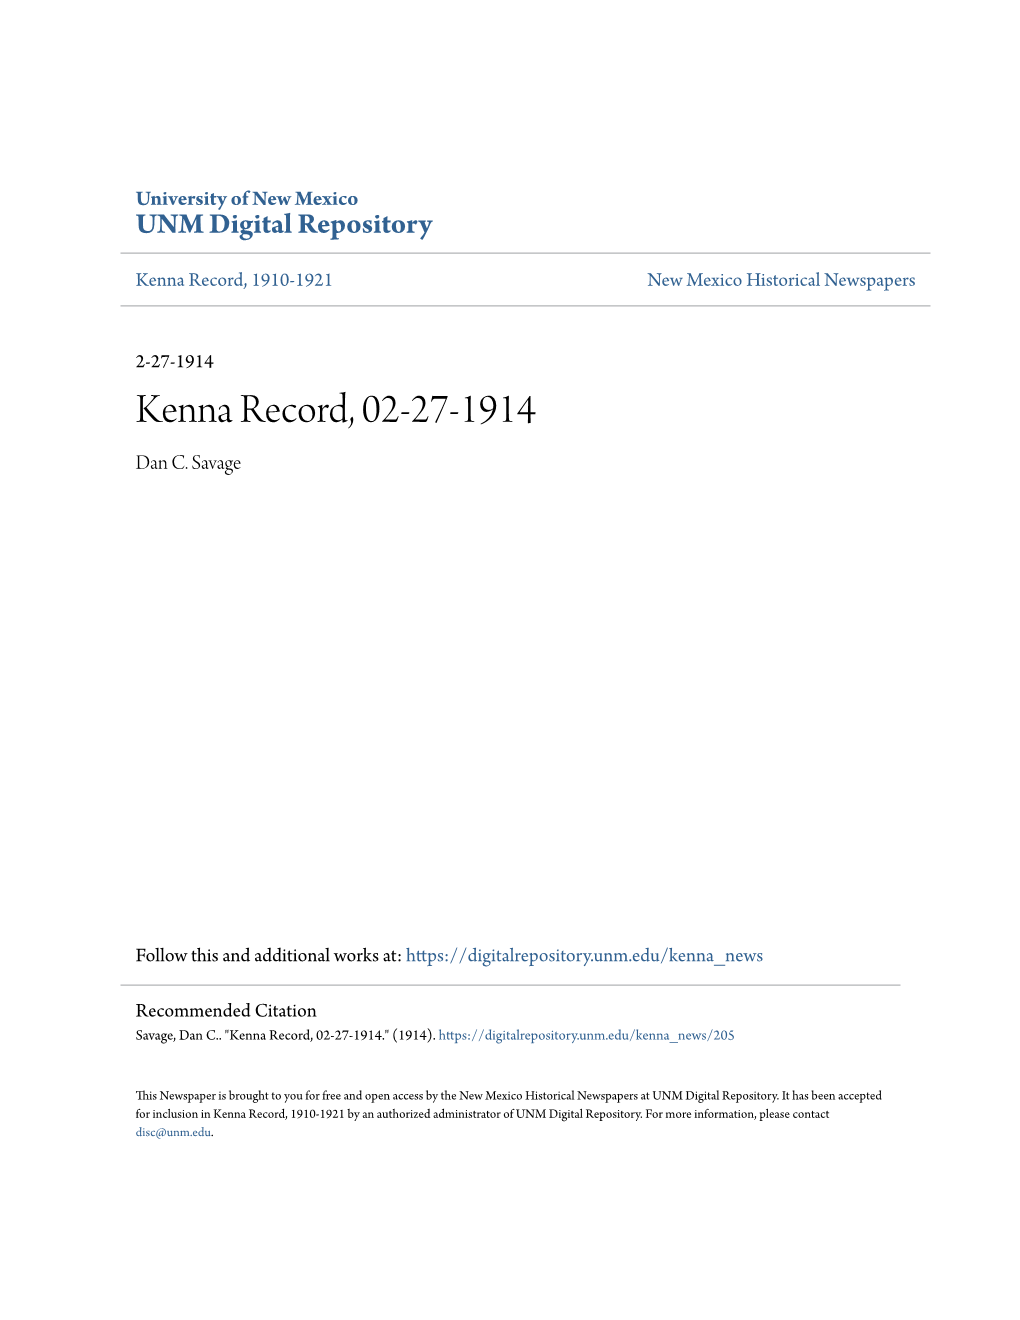 Kenna Record, 02-27-1914 Dan C